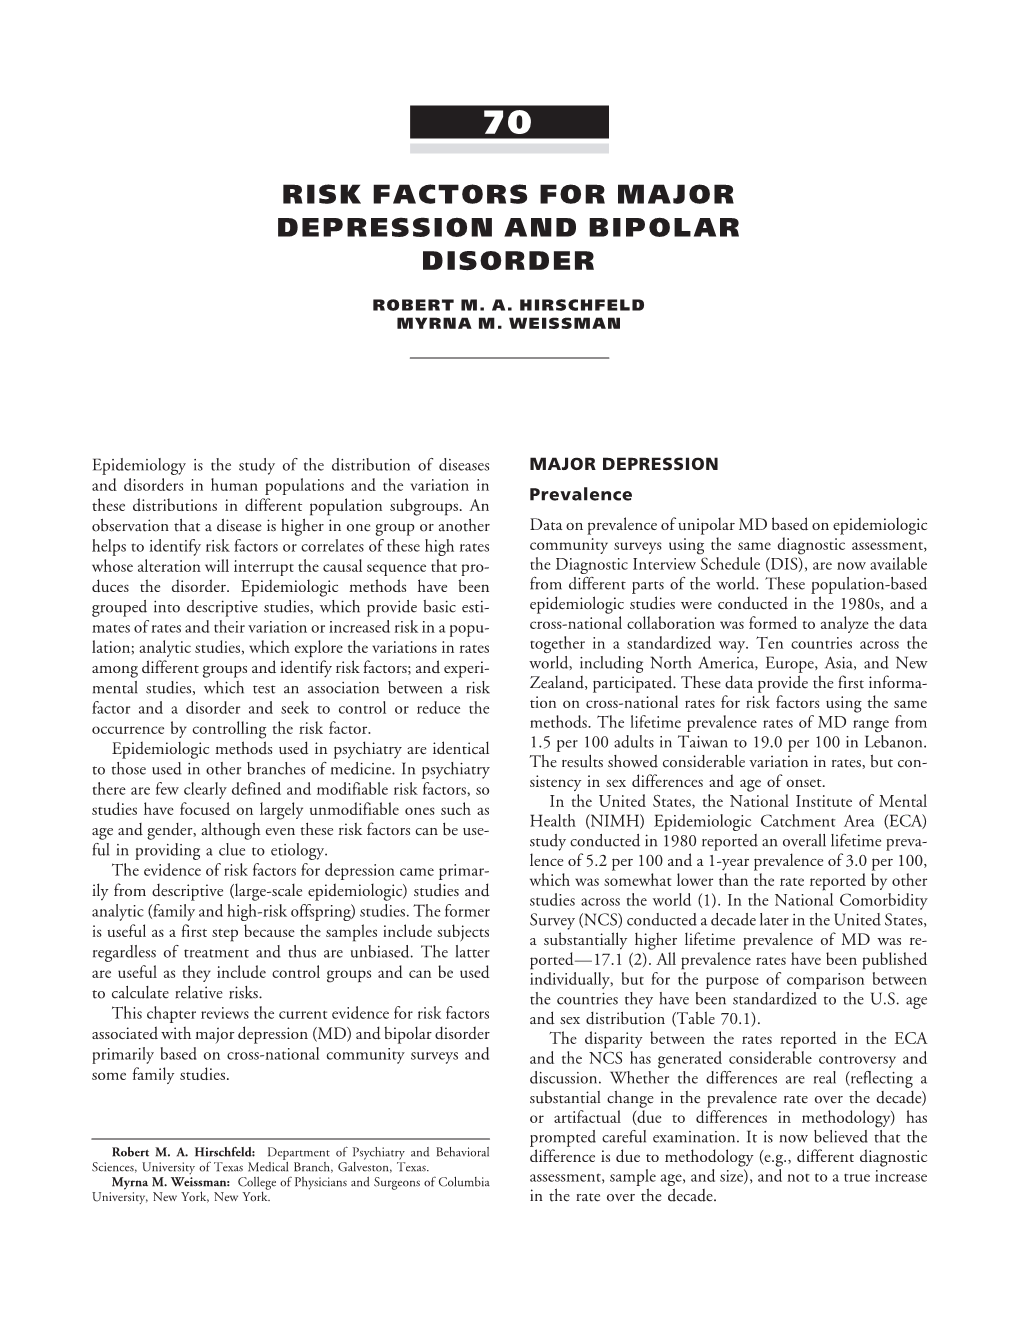 Chapter 70: Risk Factors for Major Depression and Bipolar Disorder